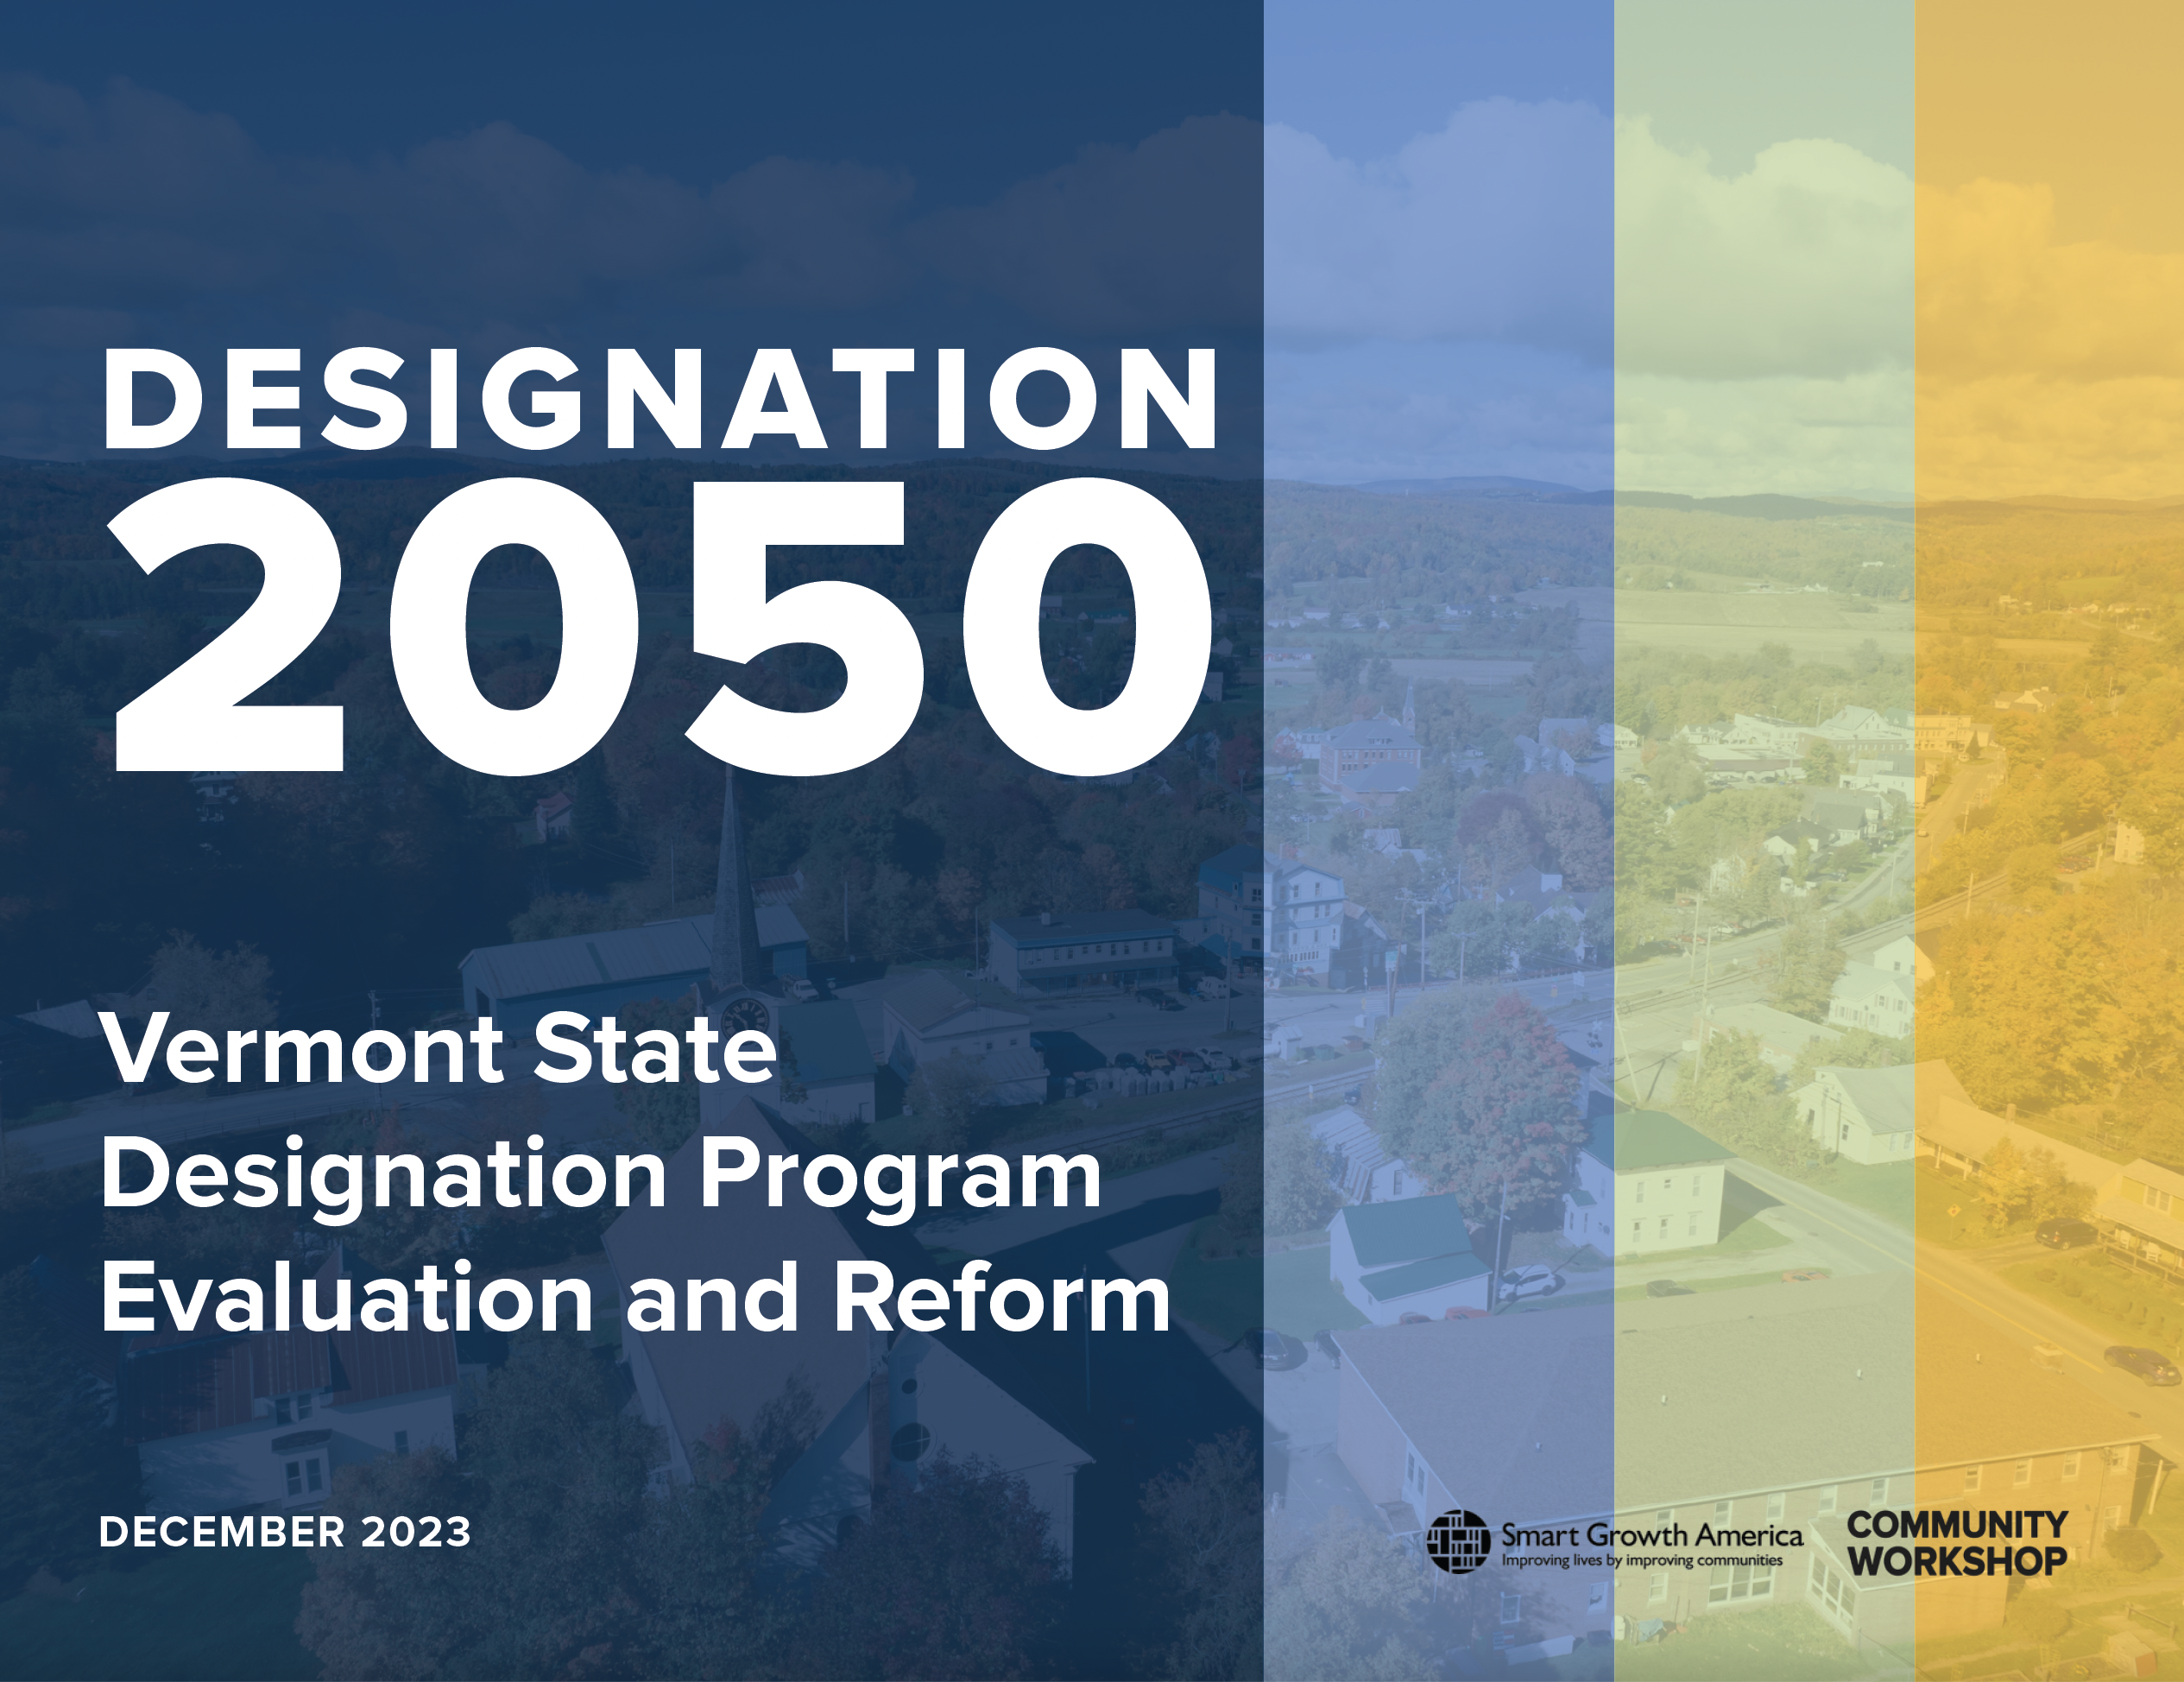 Designation 2050: Vermont State Designation Program Evaluation and Reform